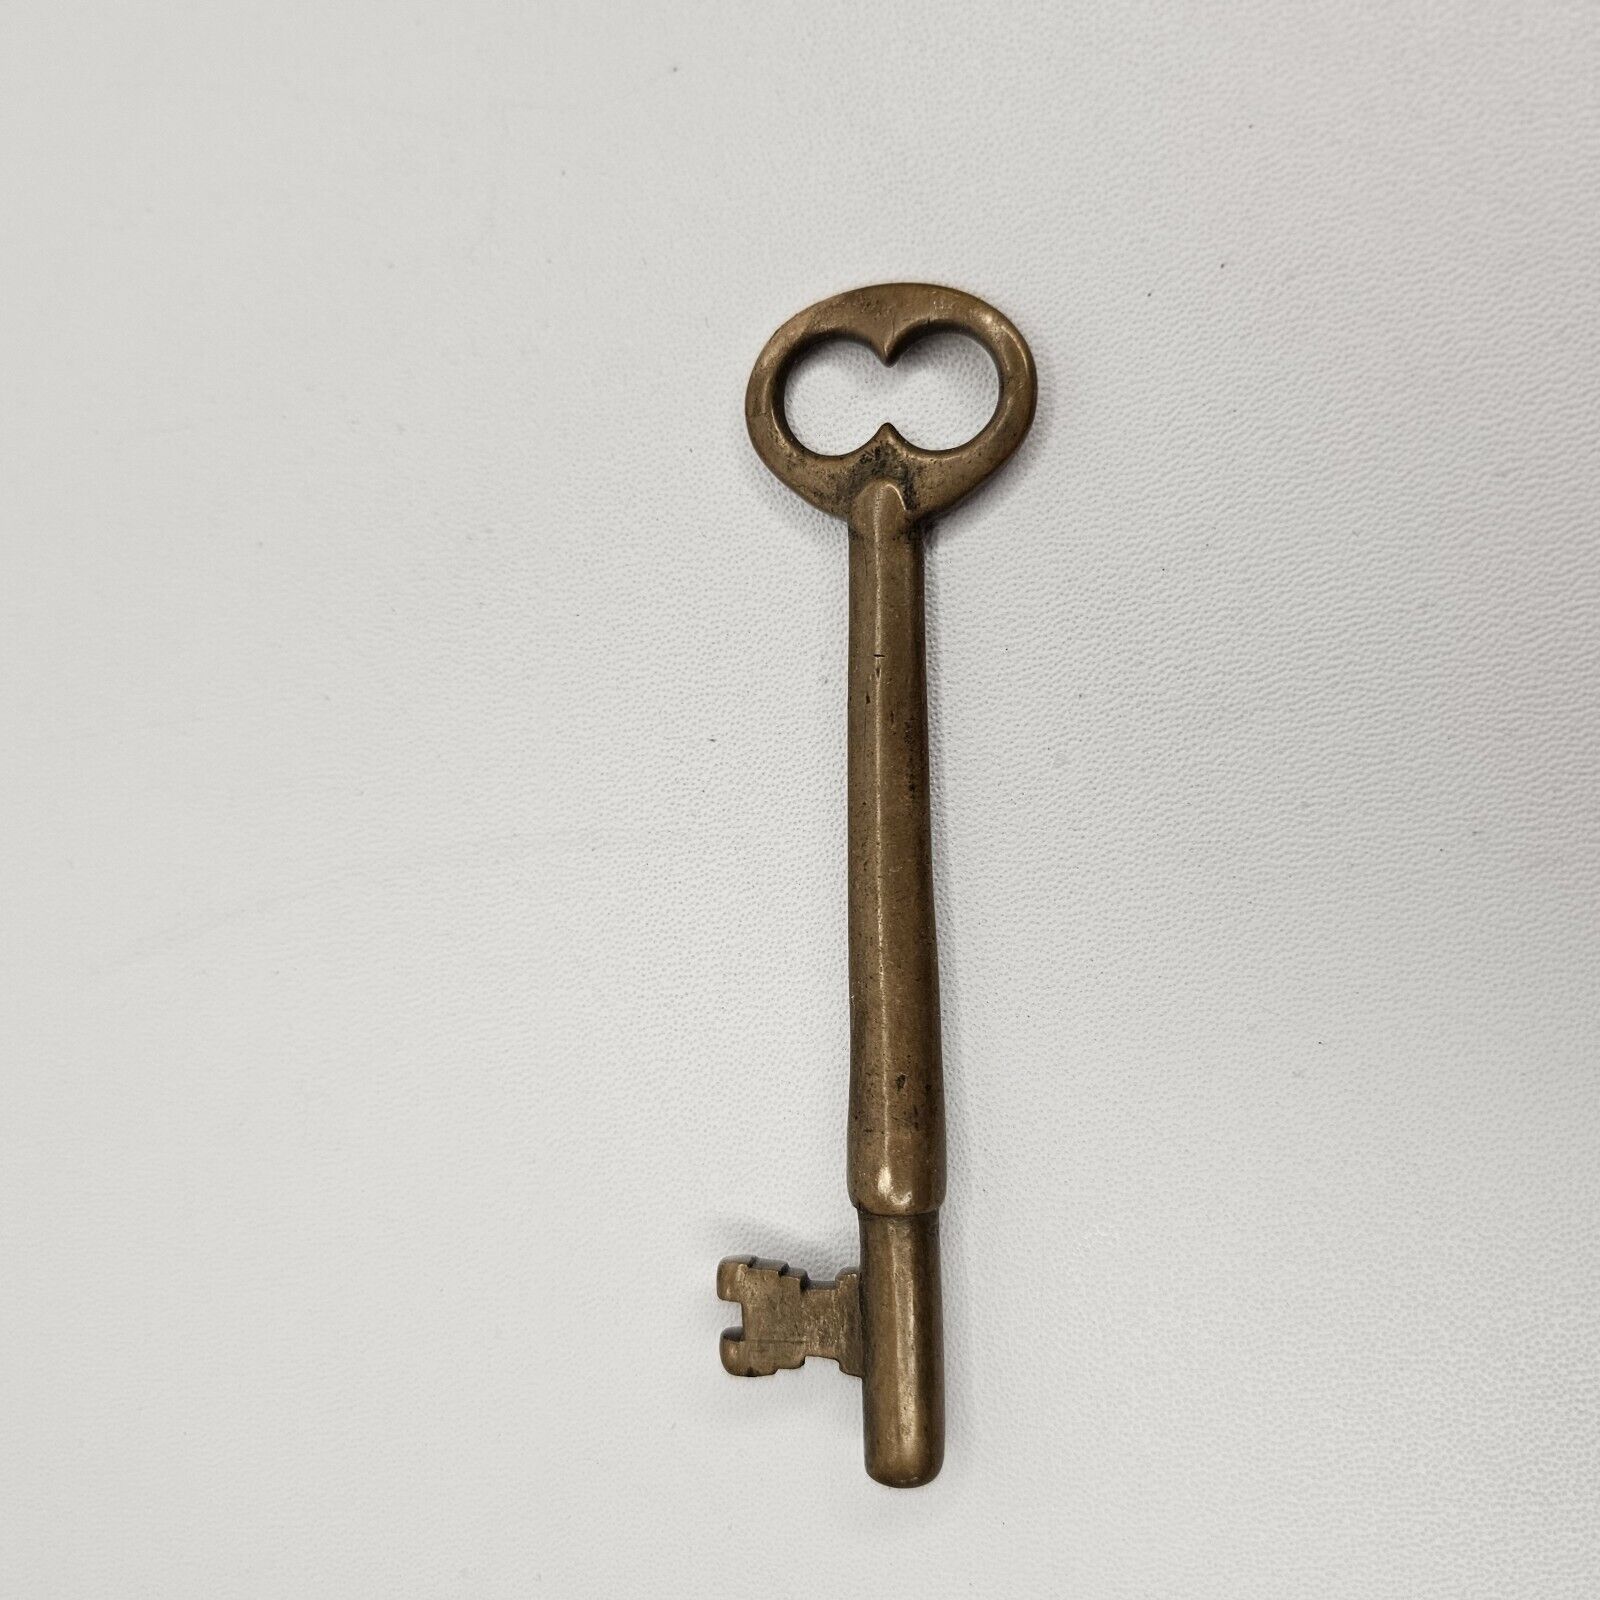 Antique Skeleton Key Old Lock Hardware Solid Metal Barrel Vintage Door Padlock